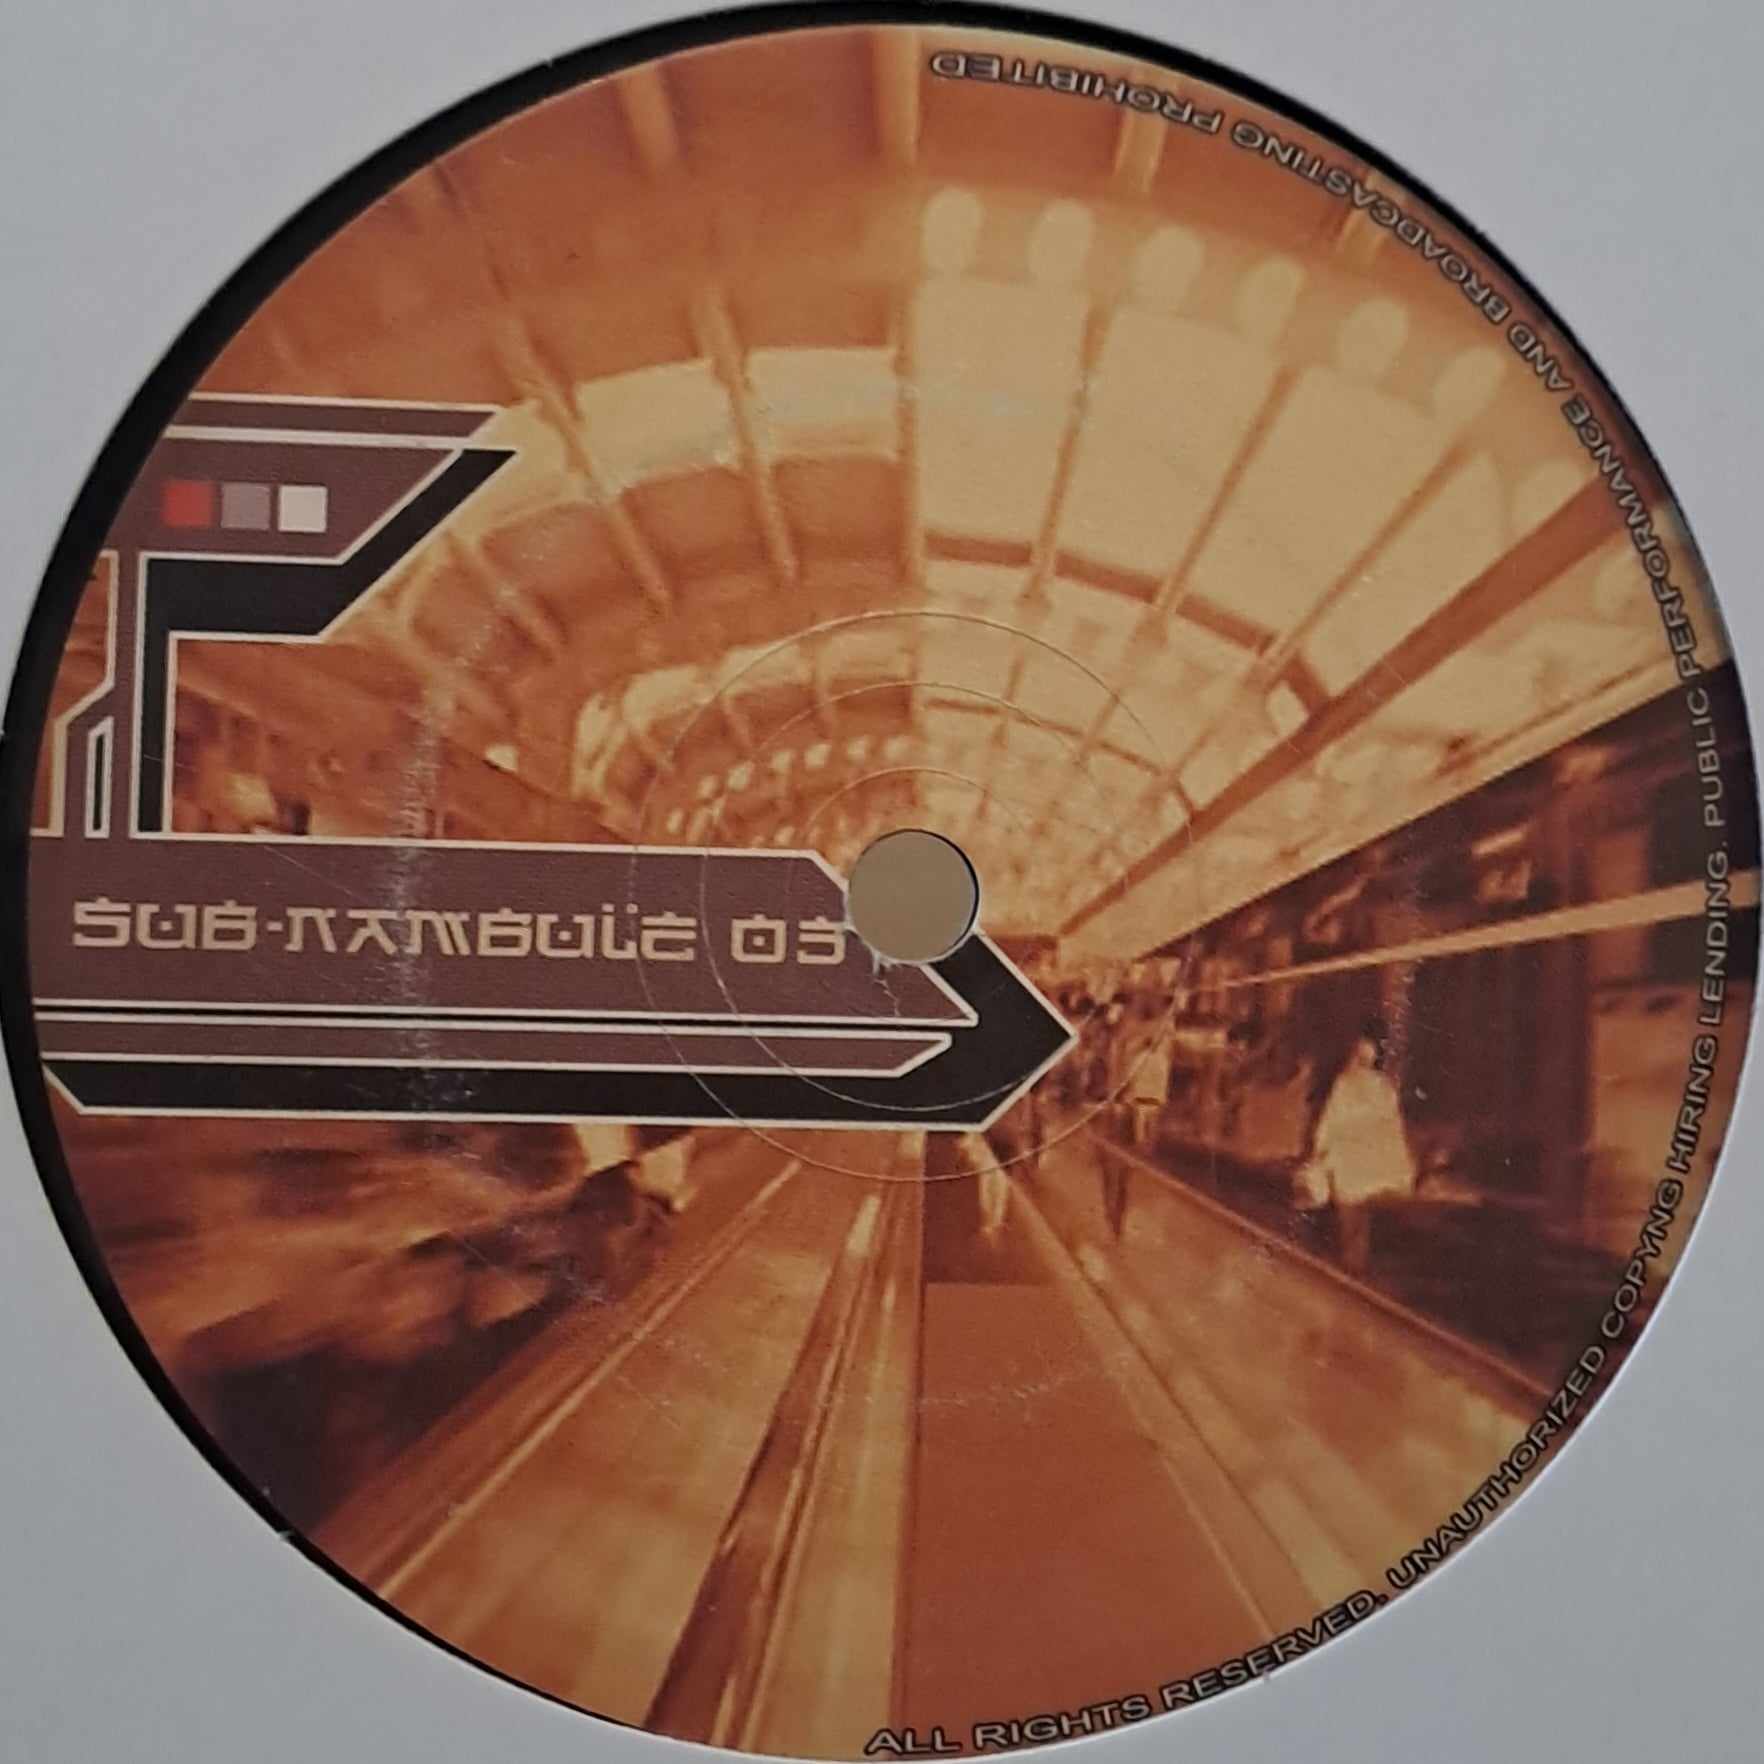 Sub-nambule 03 - vinyle freetekno